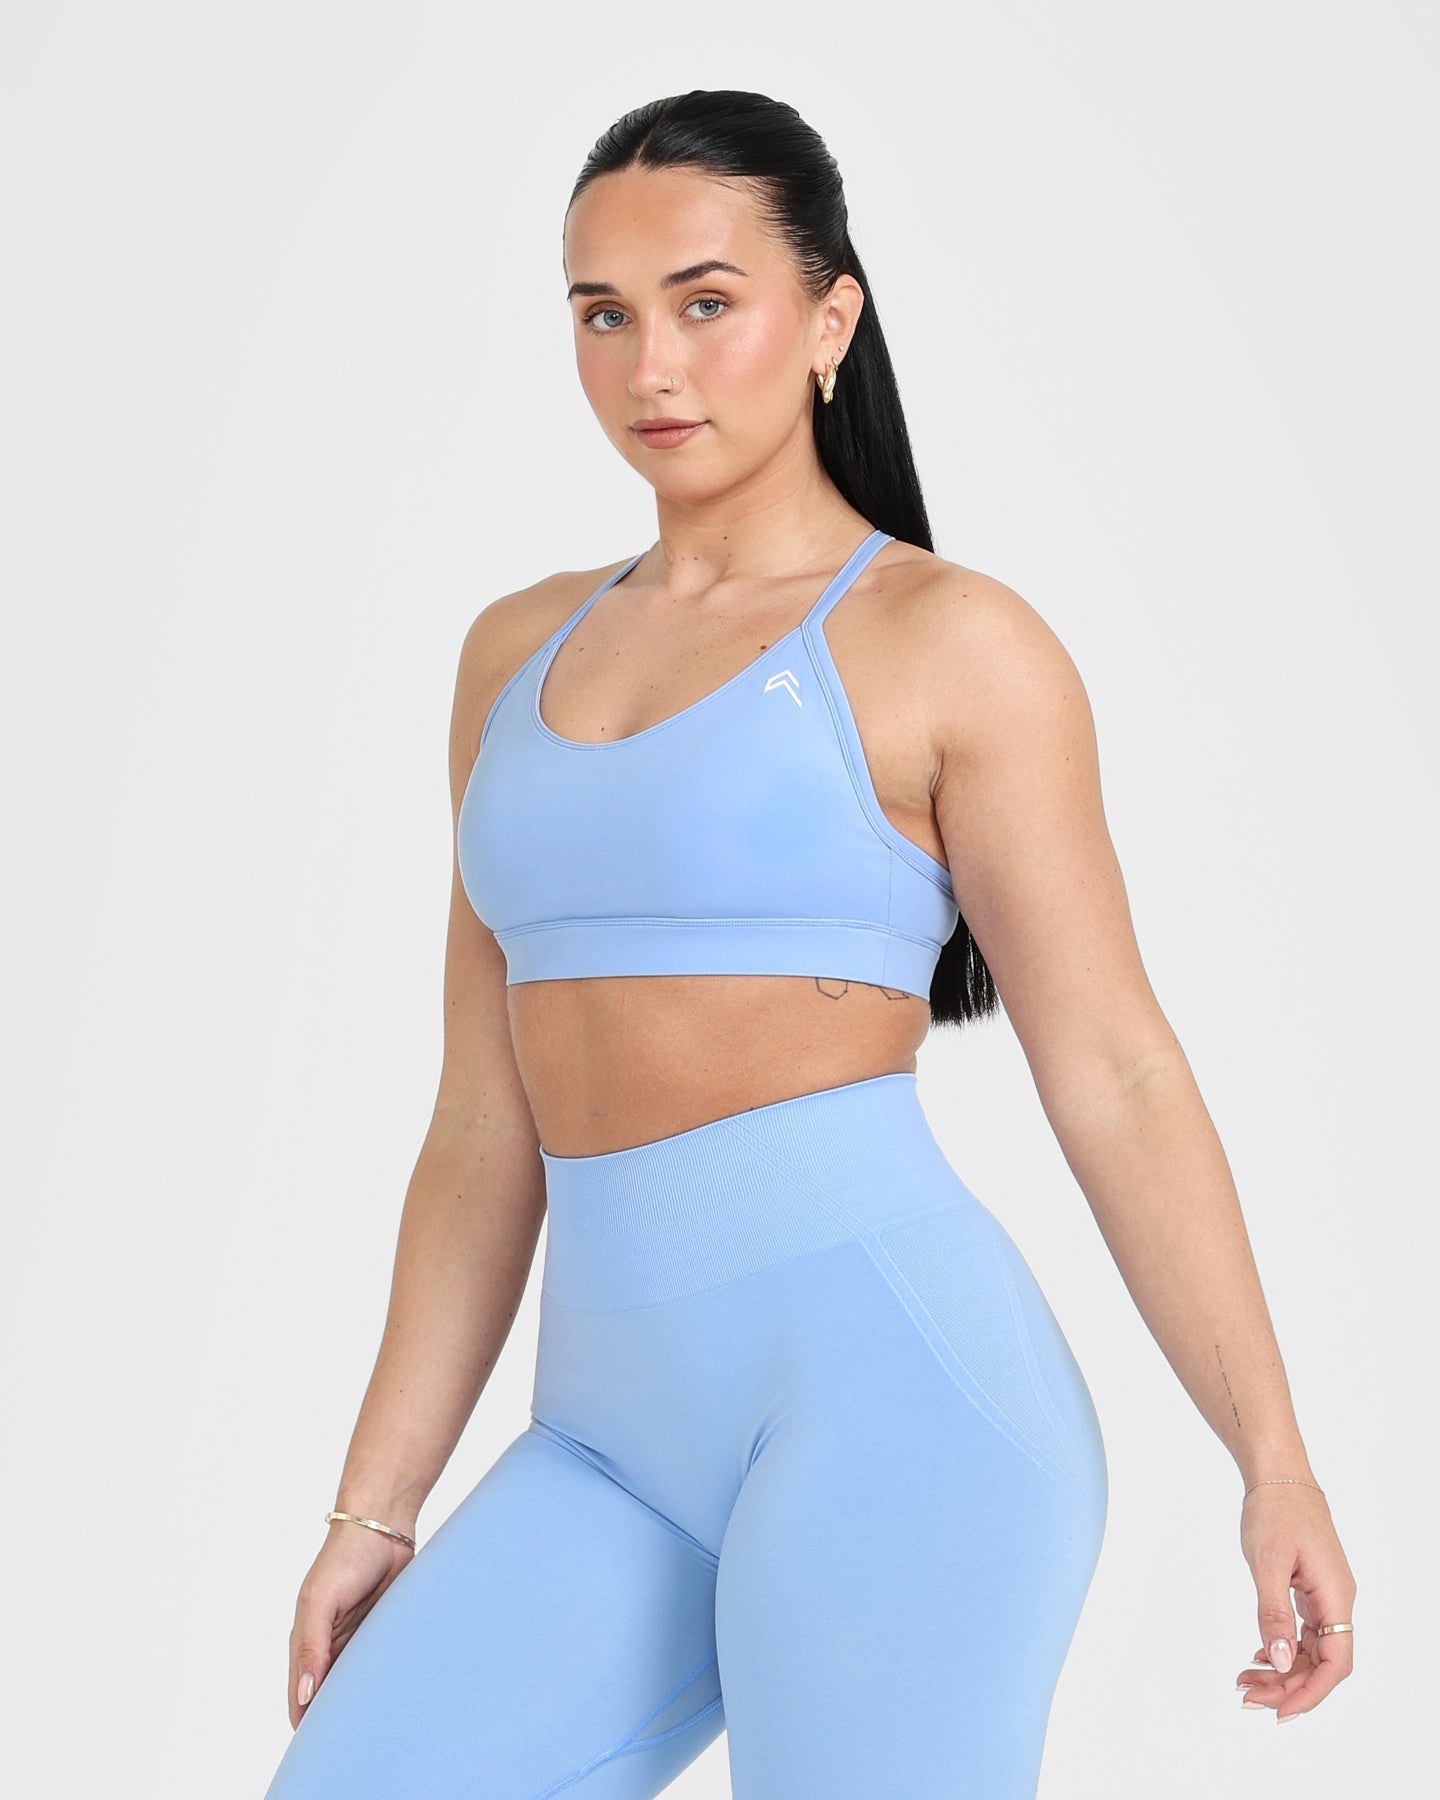 Women's Sports Bra - Shaded Blue Design - Digital Rawness